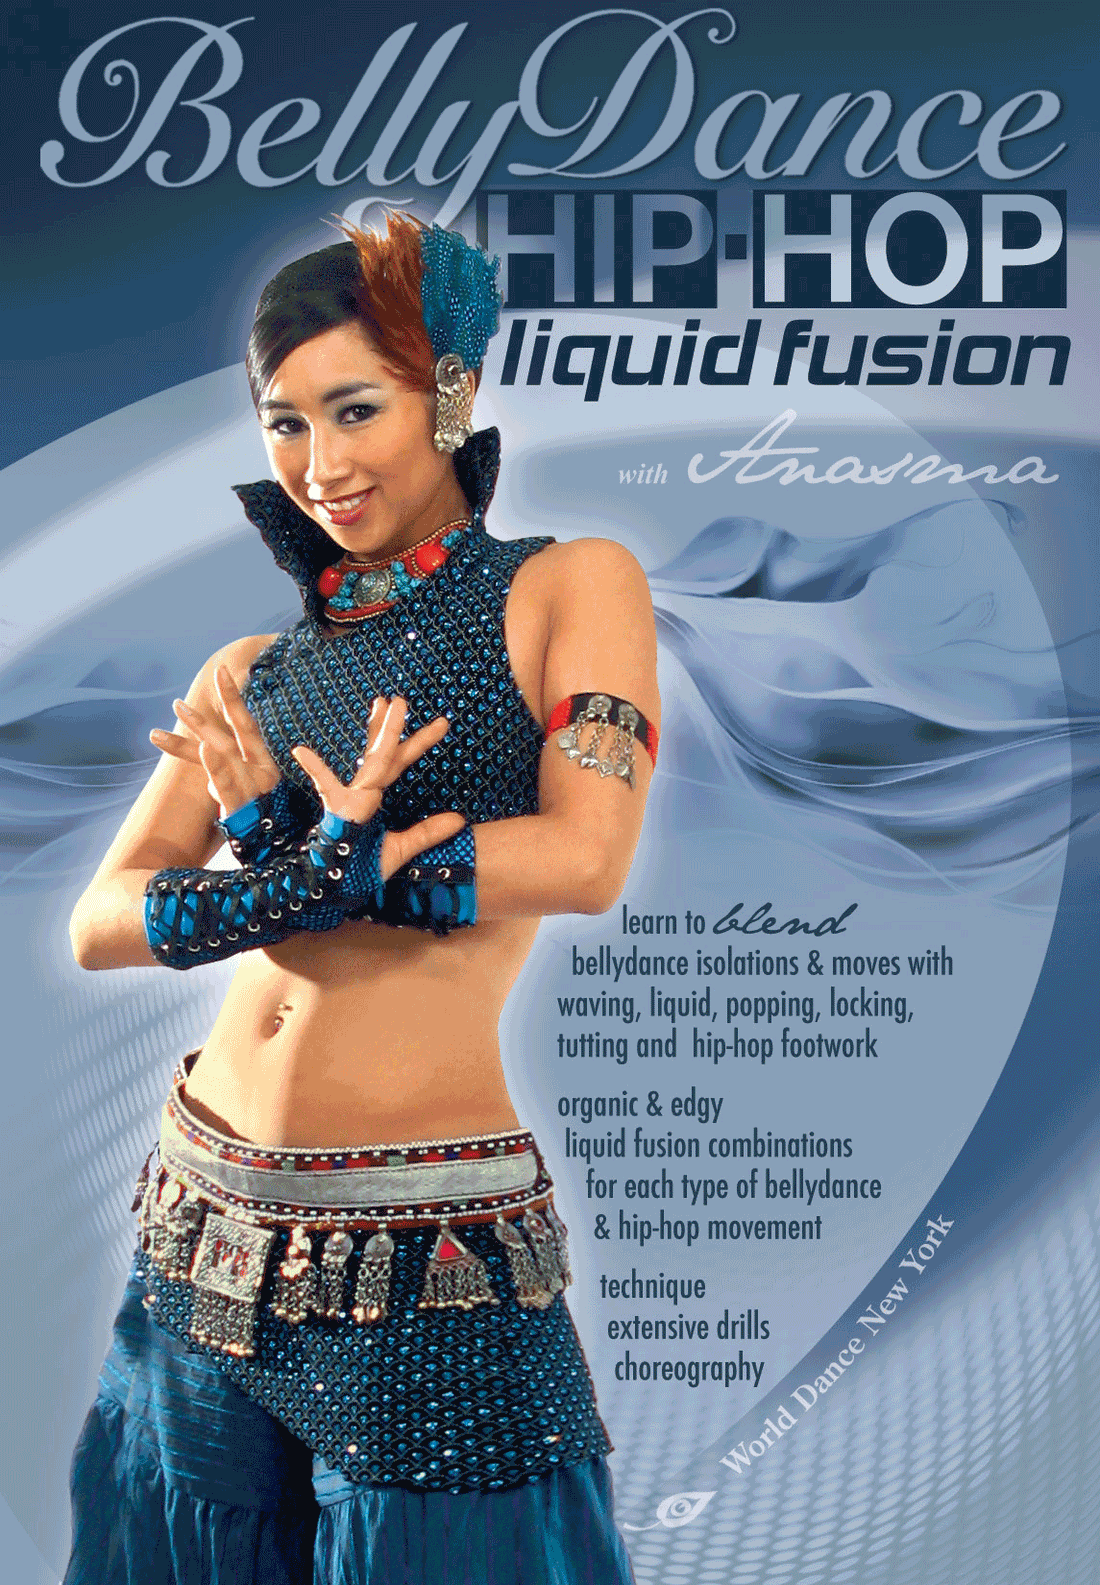 "Belly Dance - Hip-Hop: Liquid Fusion" 2-DVD Set with Anasma - World Dance New York